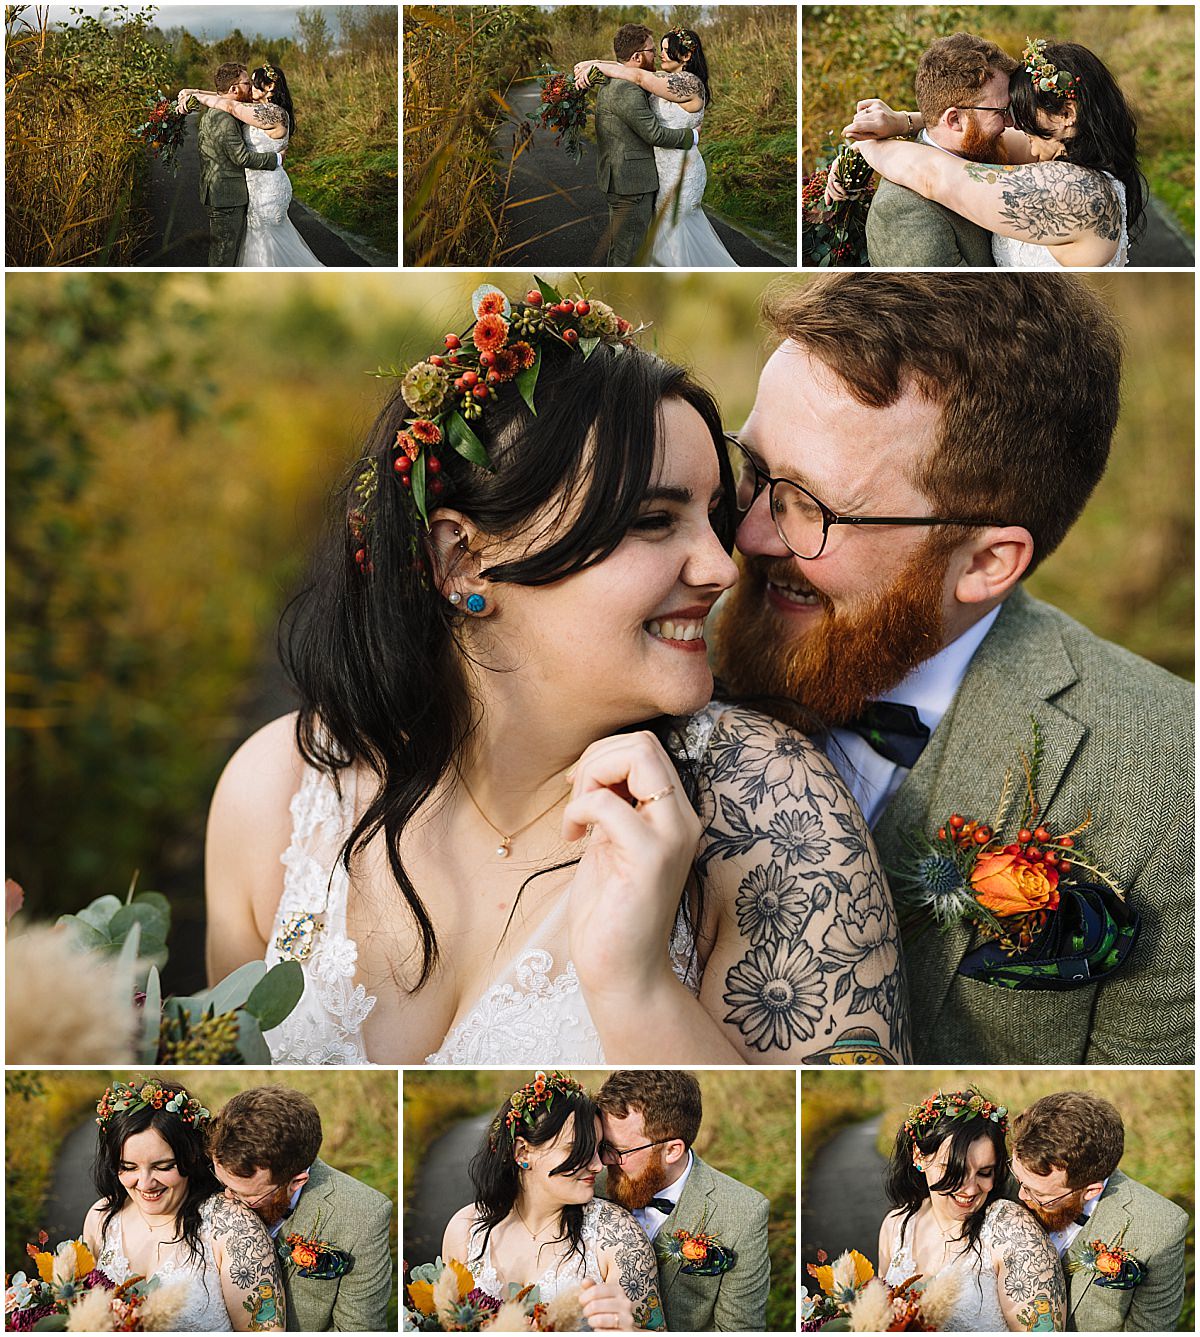 Beautiful wedding portraits at Brockholes Nature Reserve, Lancashire